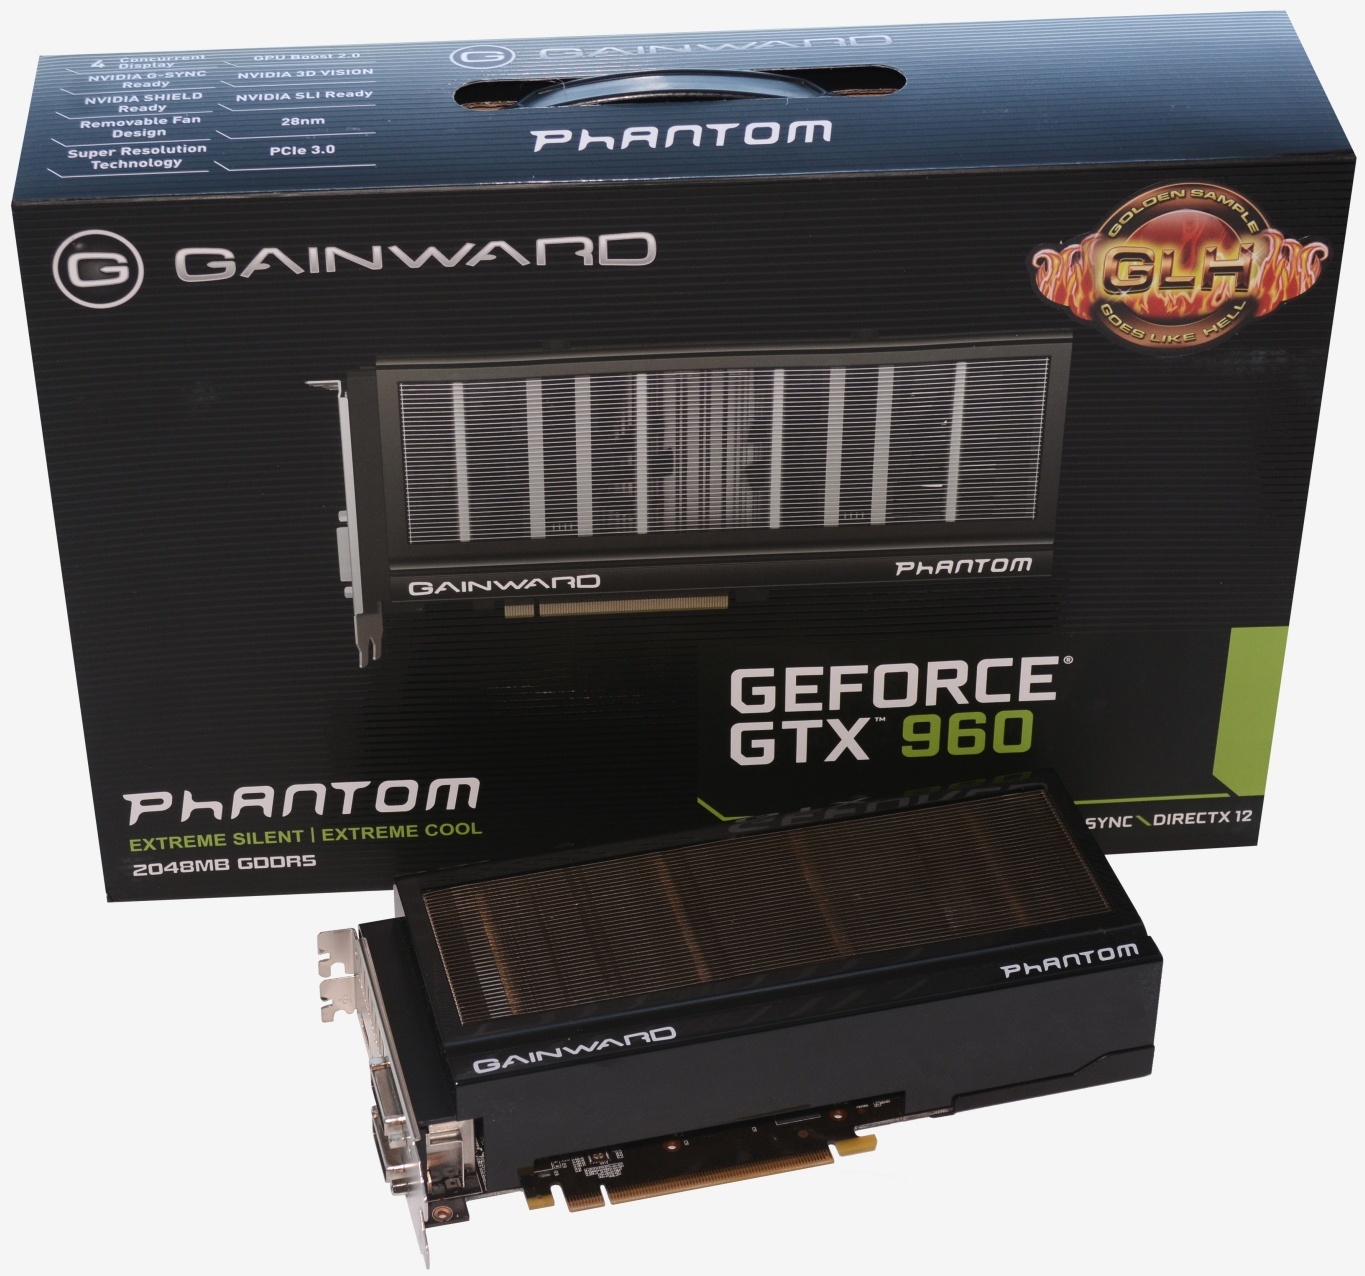 Geforce GTX 960 Review: Sweet Spot’ GPU Or Not?